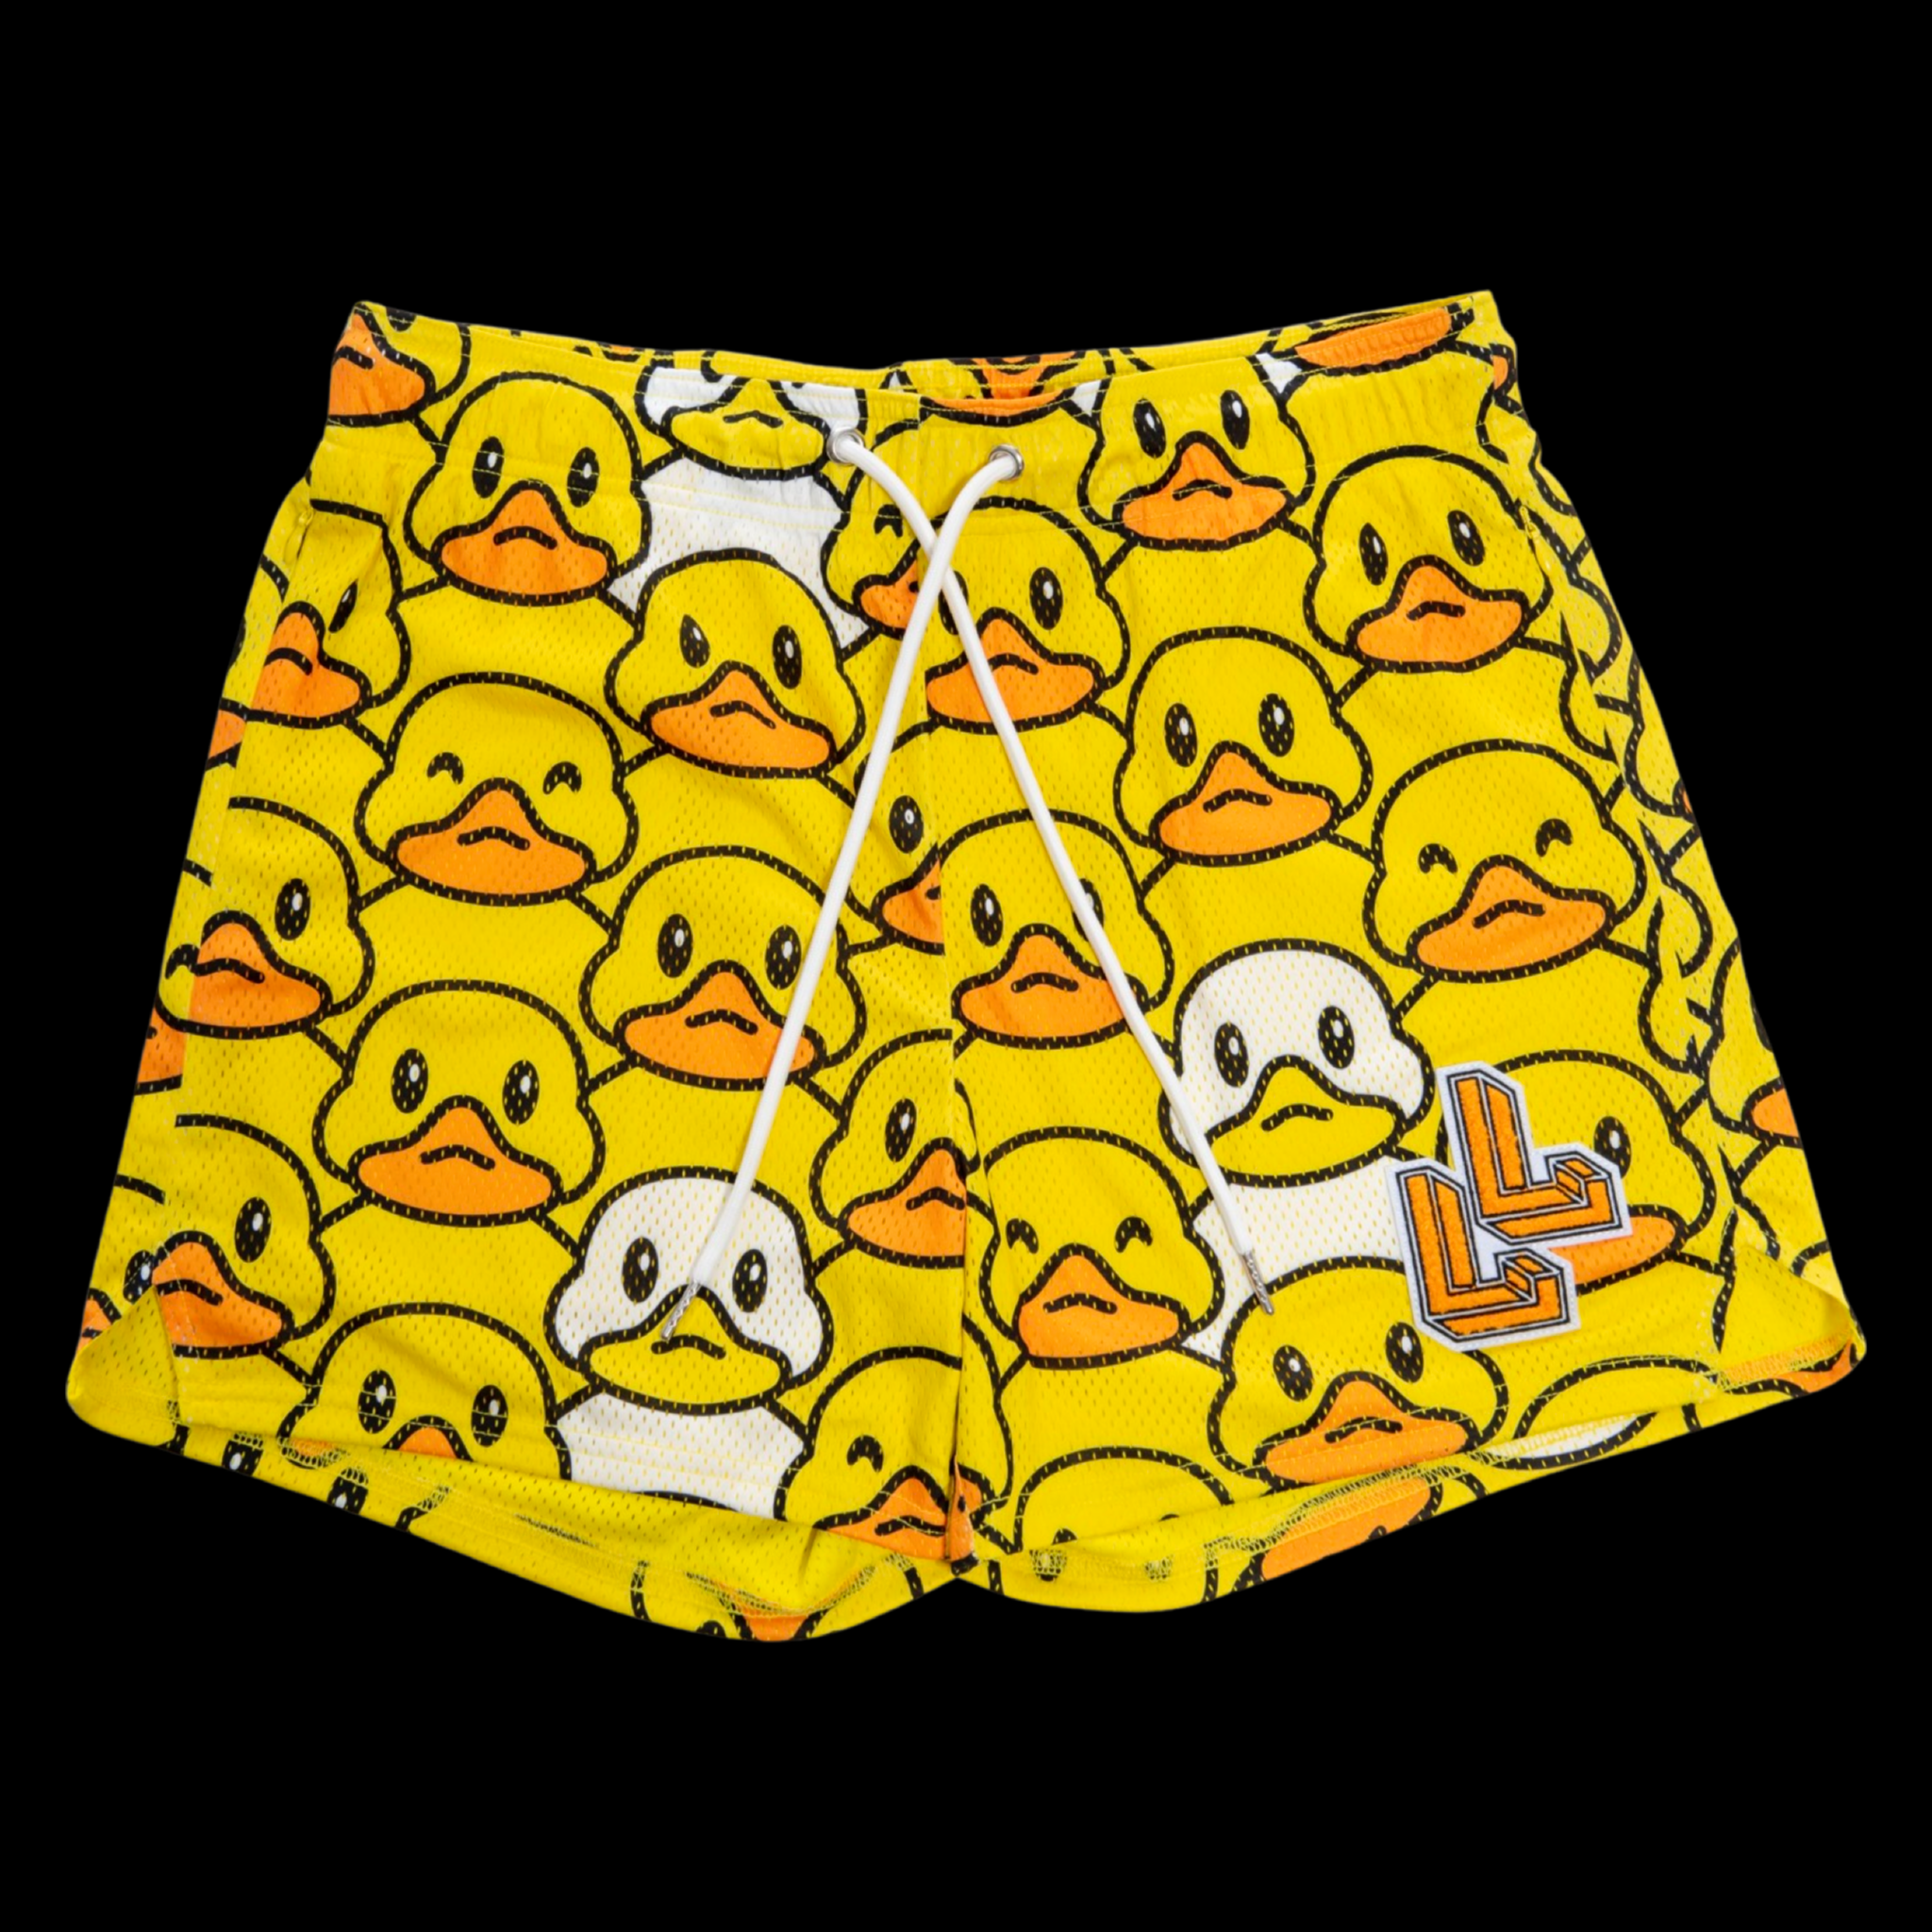 Duck workout shorts